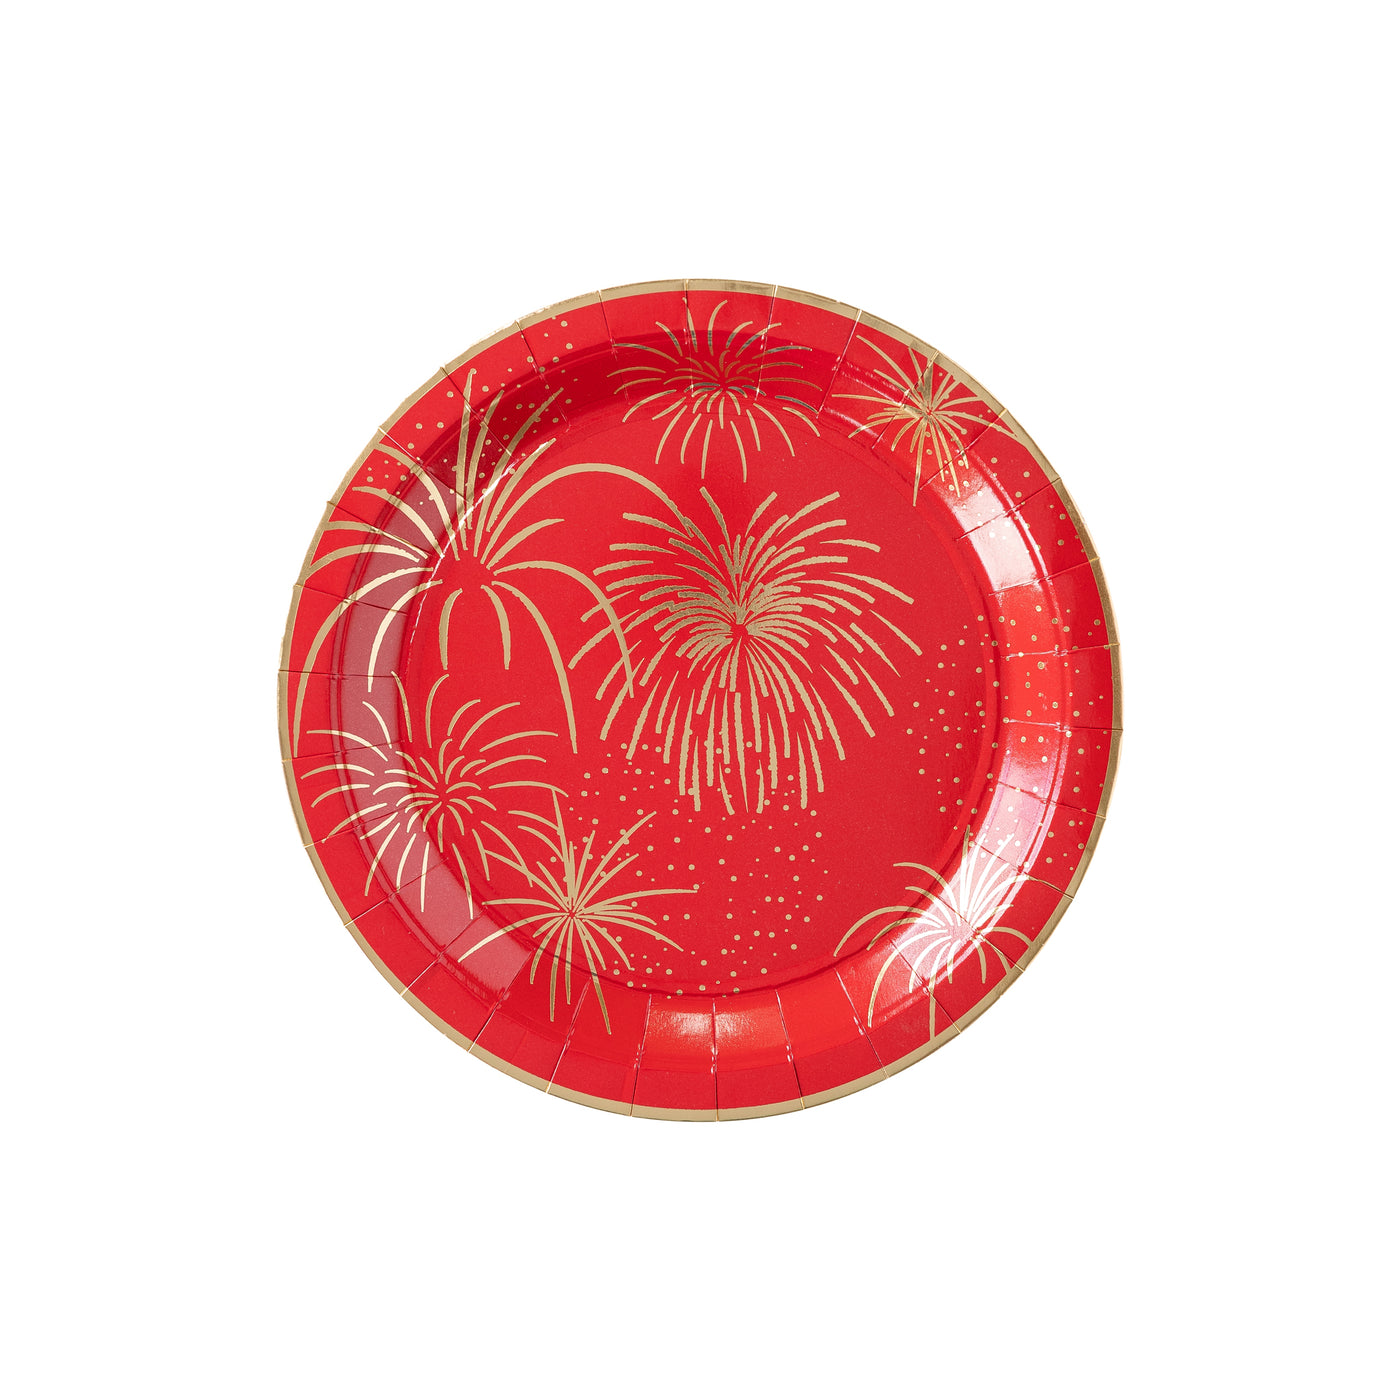 Lunar New Year Fireworks Plate